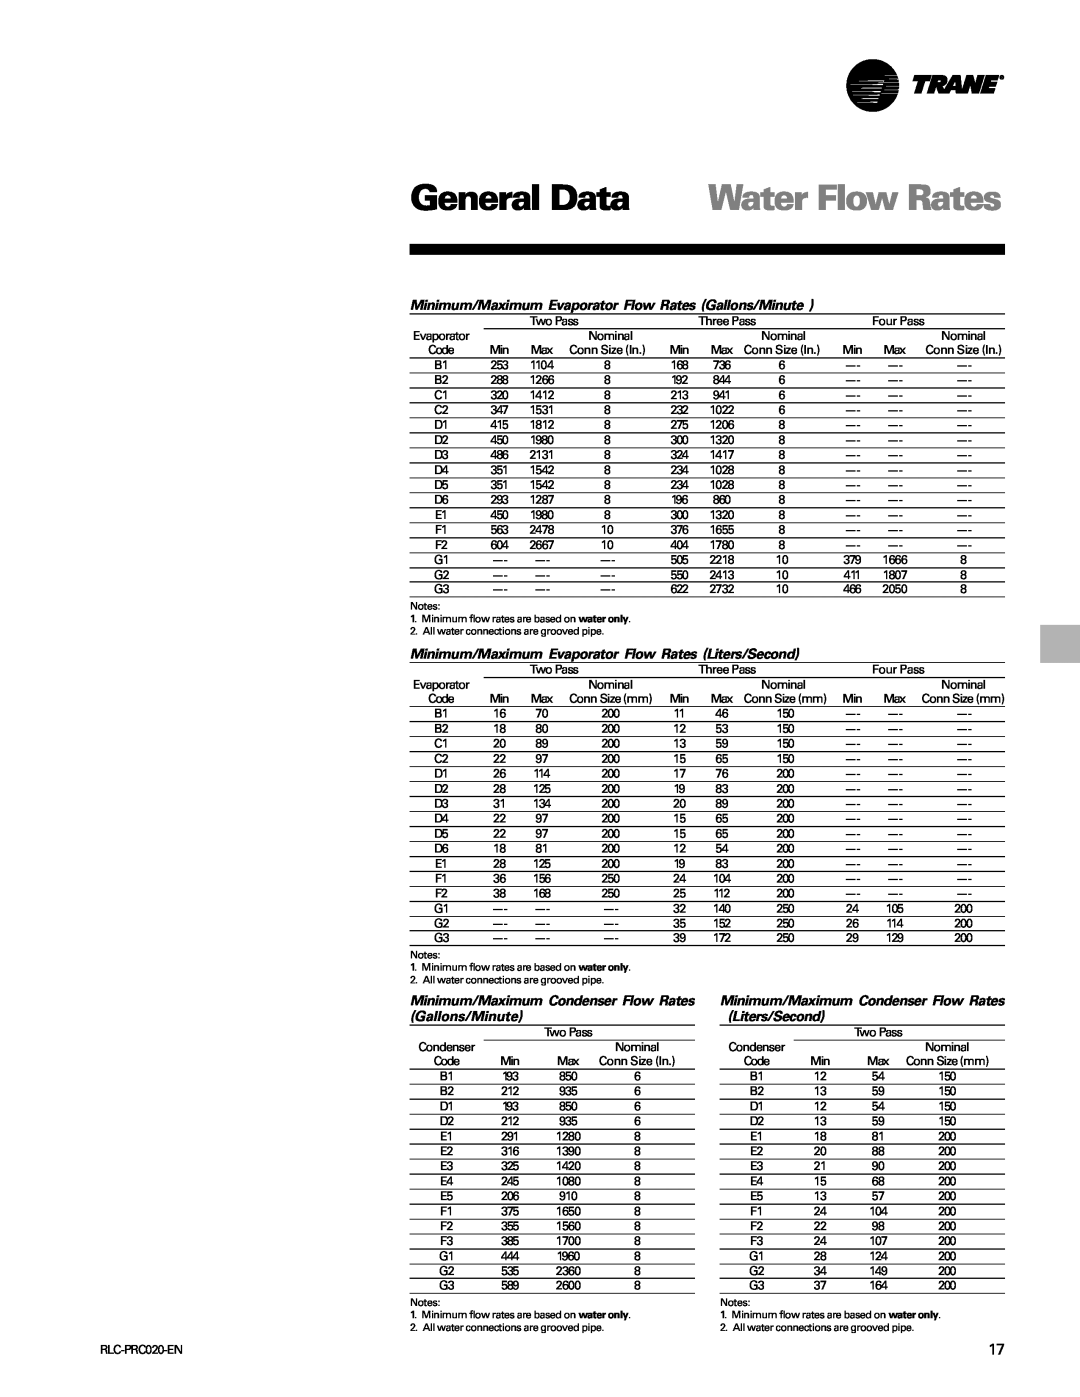 Trane RTHD manual Water Flow Rates, General Data 